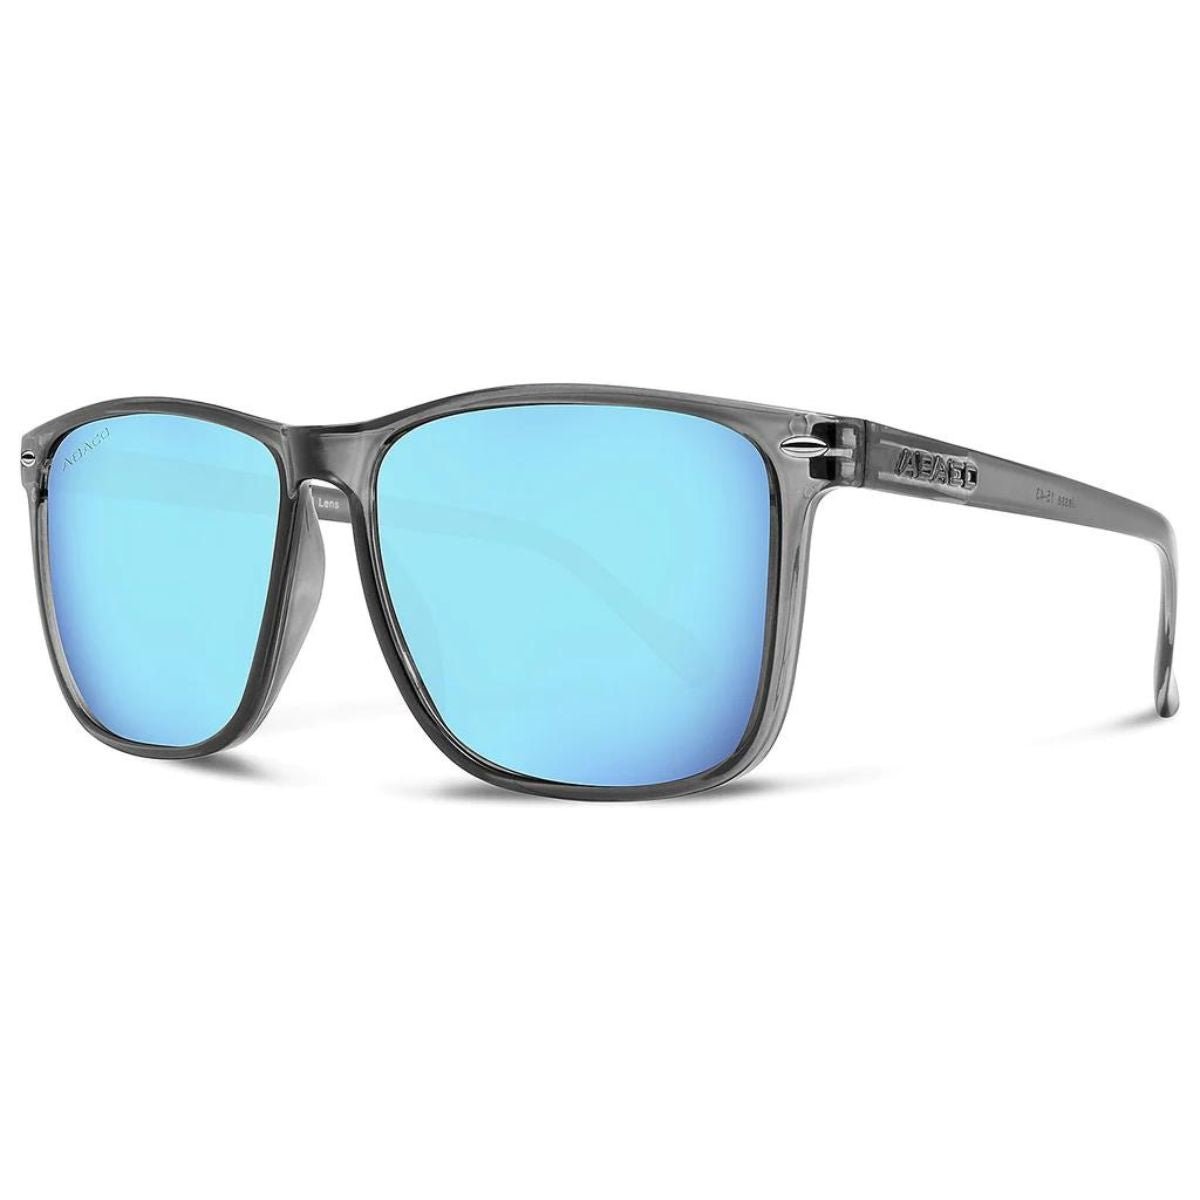 Abaco Jesse Sunglasses in Crystal Grey/Caribbean Blue - BoardCo